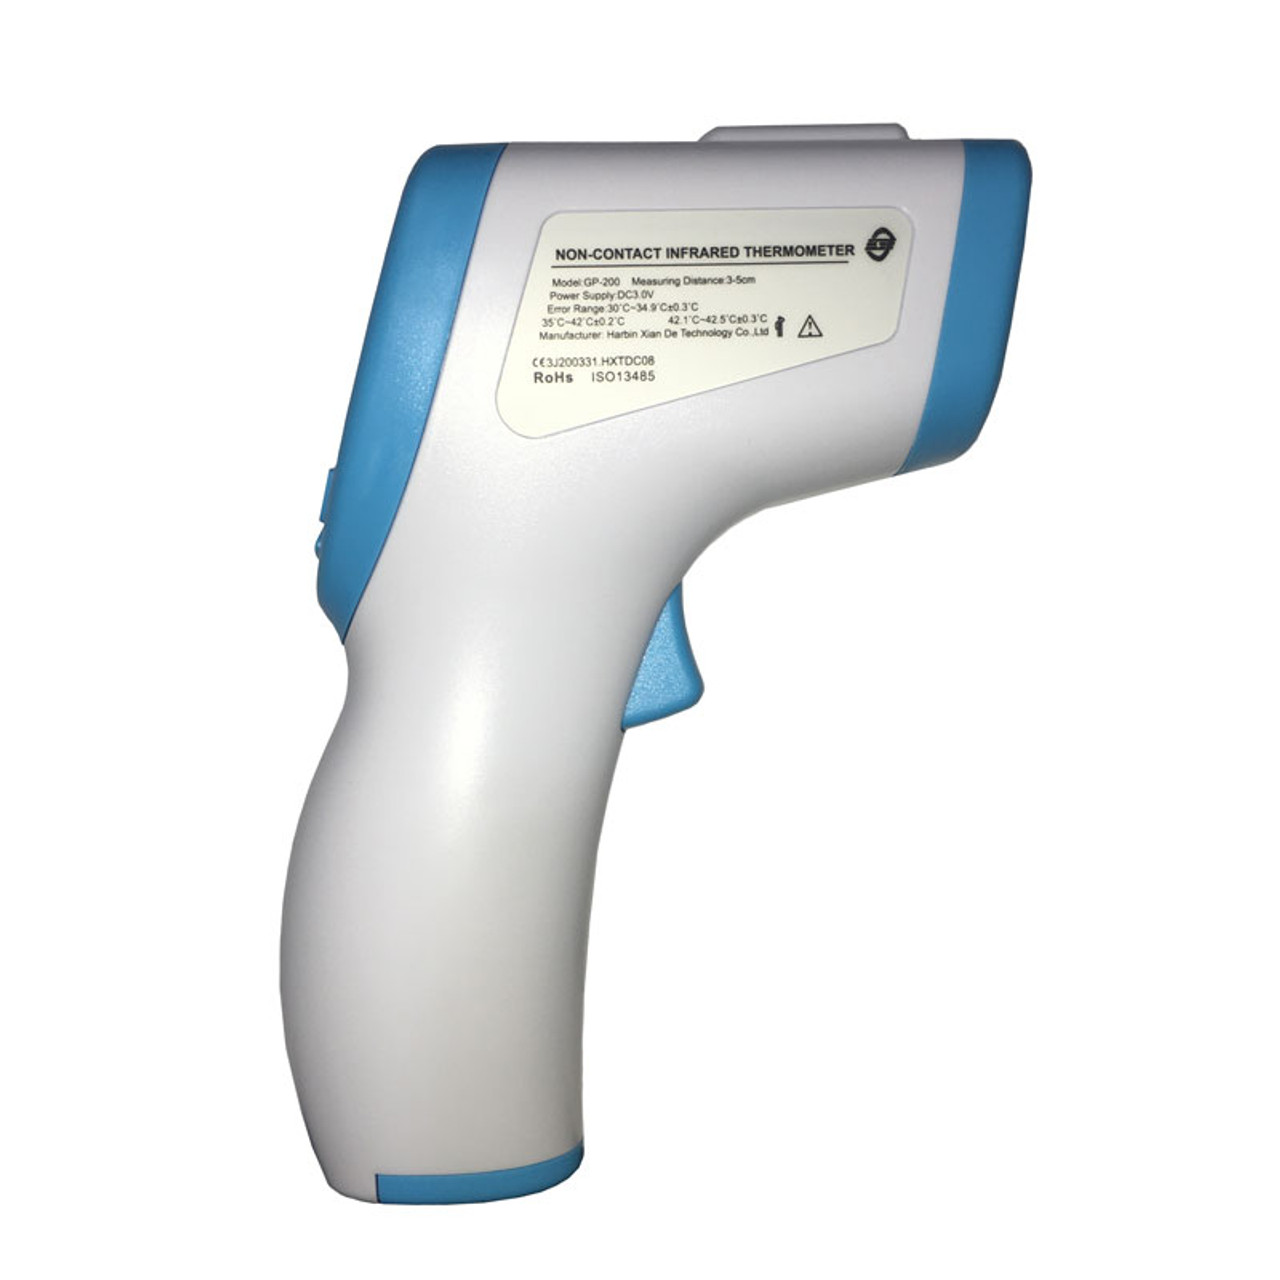 Handheld Infrared Thermometer Digital Backlit LCD Auto Shutoff